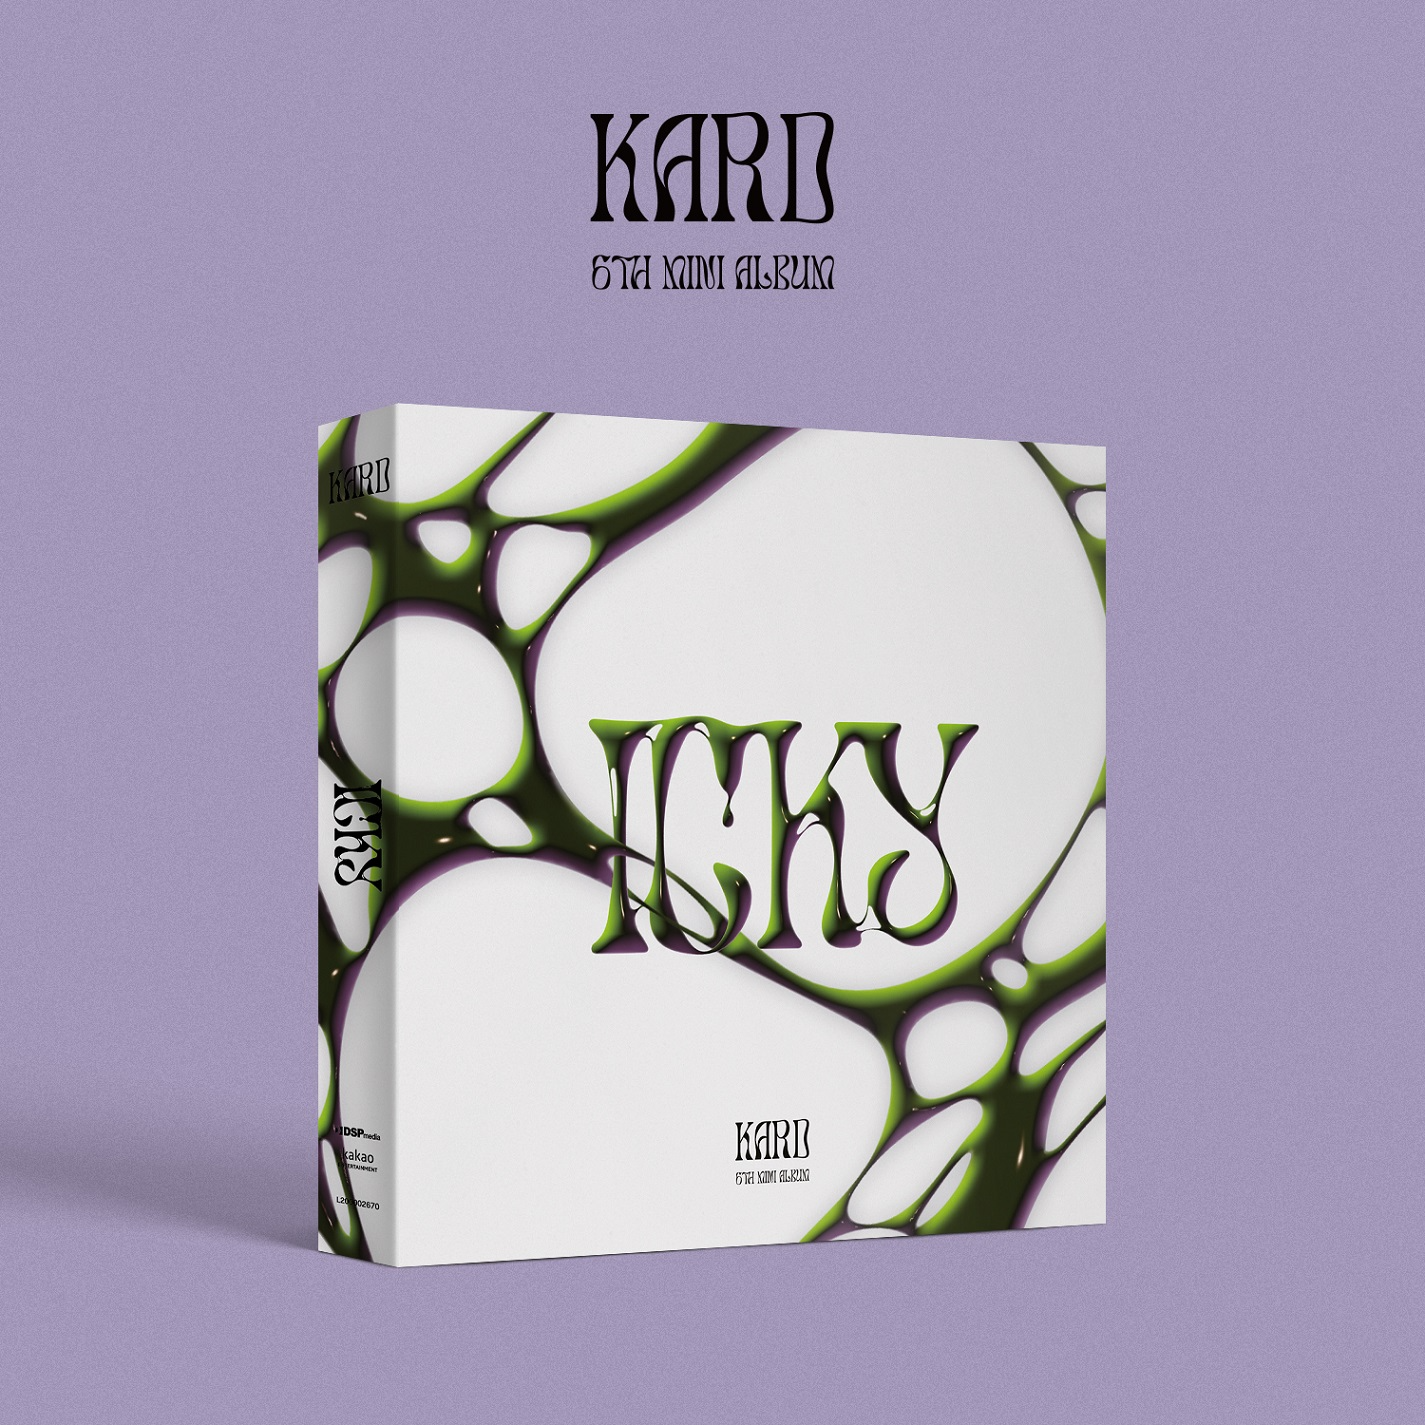 KARD 6th Mini Album [ICKY] (Special Ver.) + Photocard